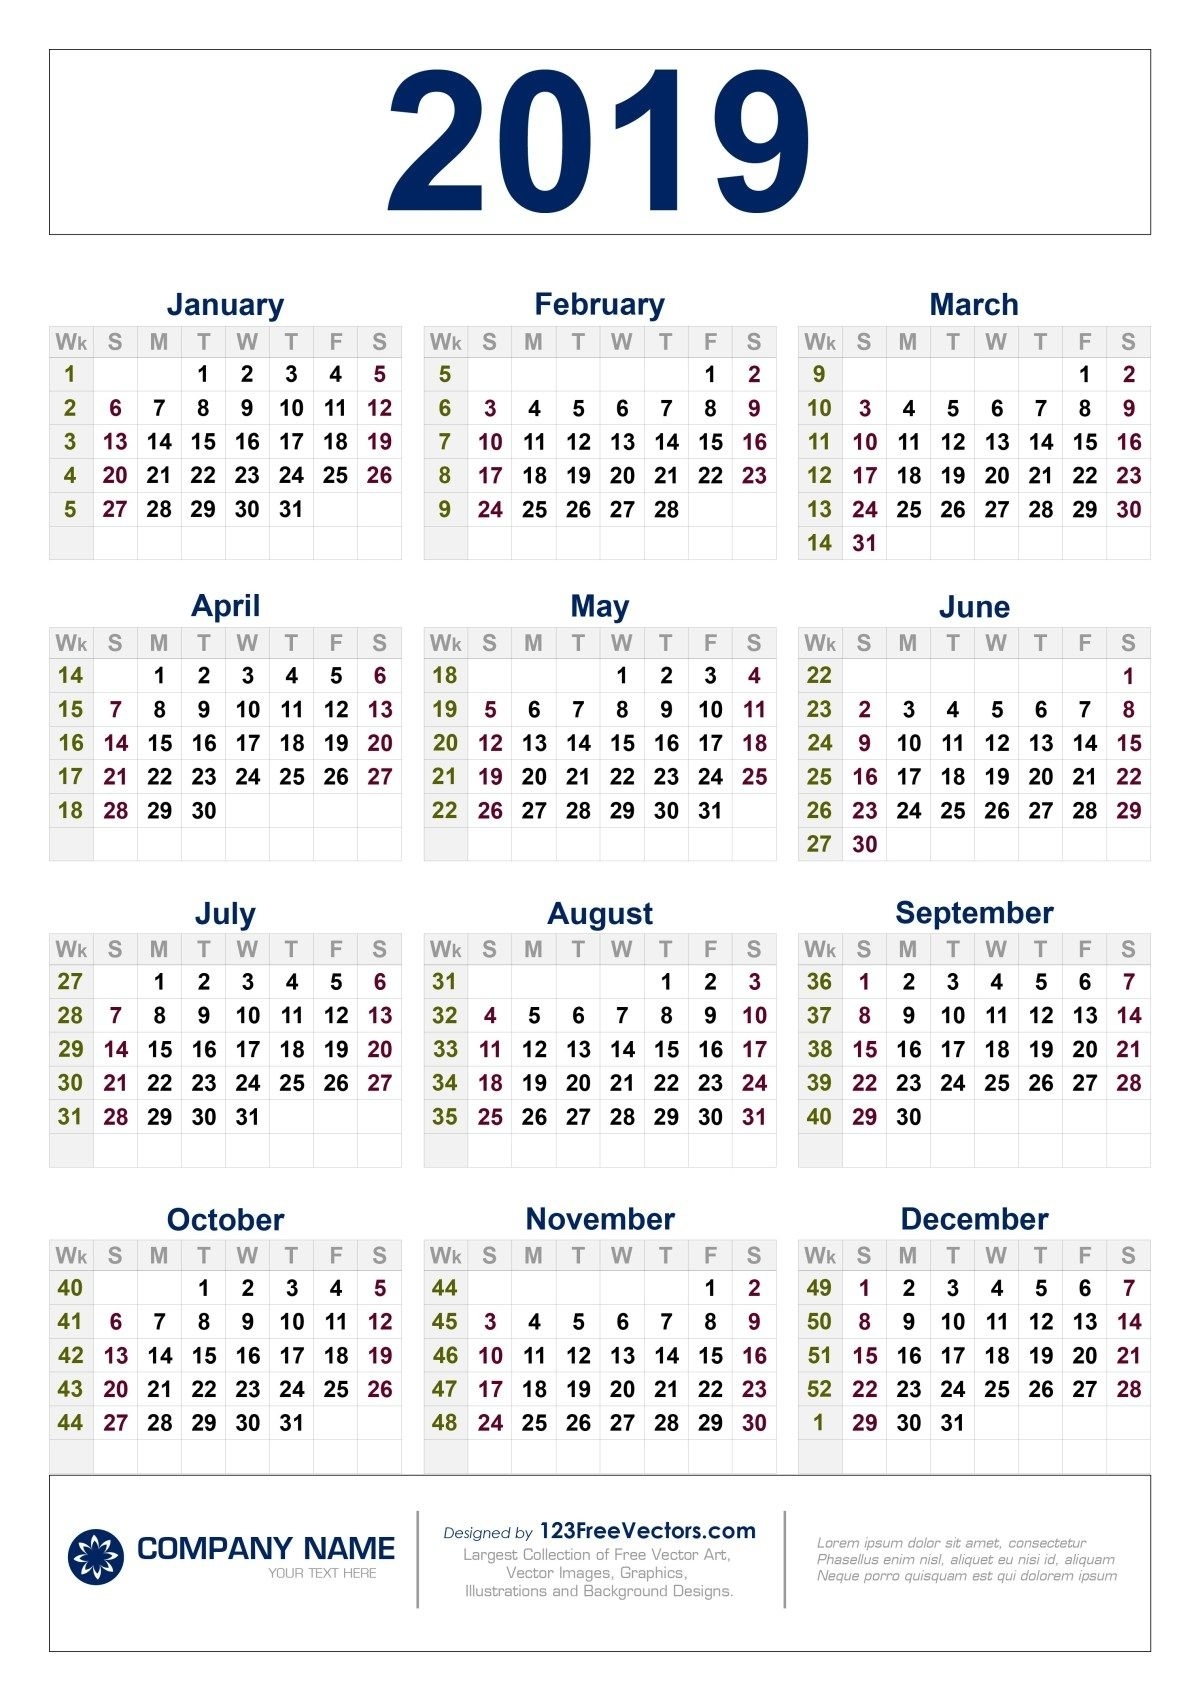 Free Download 2019 Calendar With Week Numbers | Calendar in Calendar With Week Numbers 2019/2020